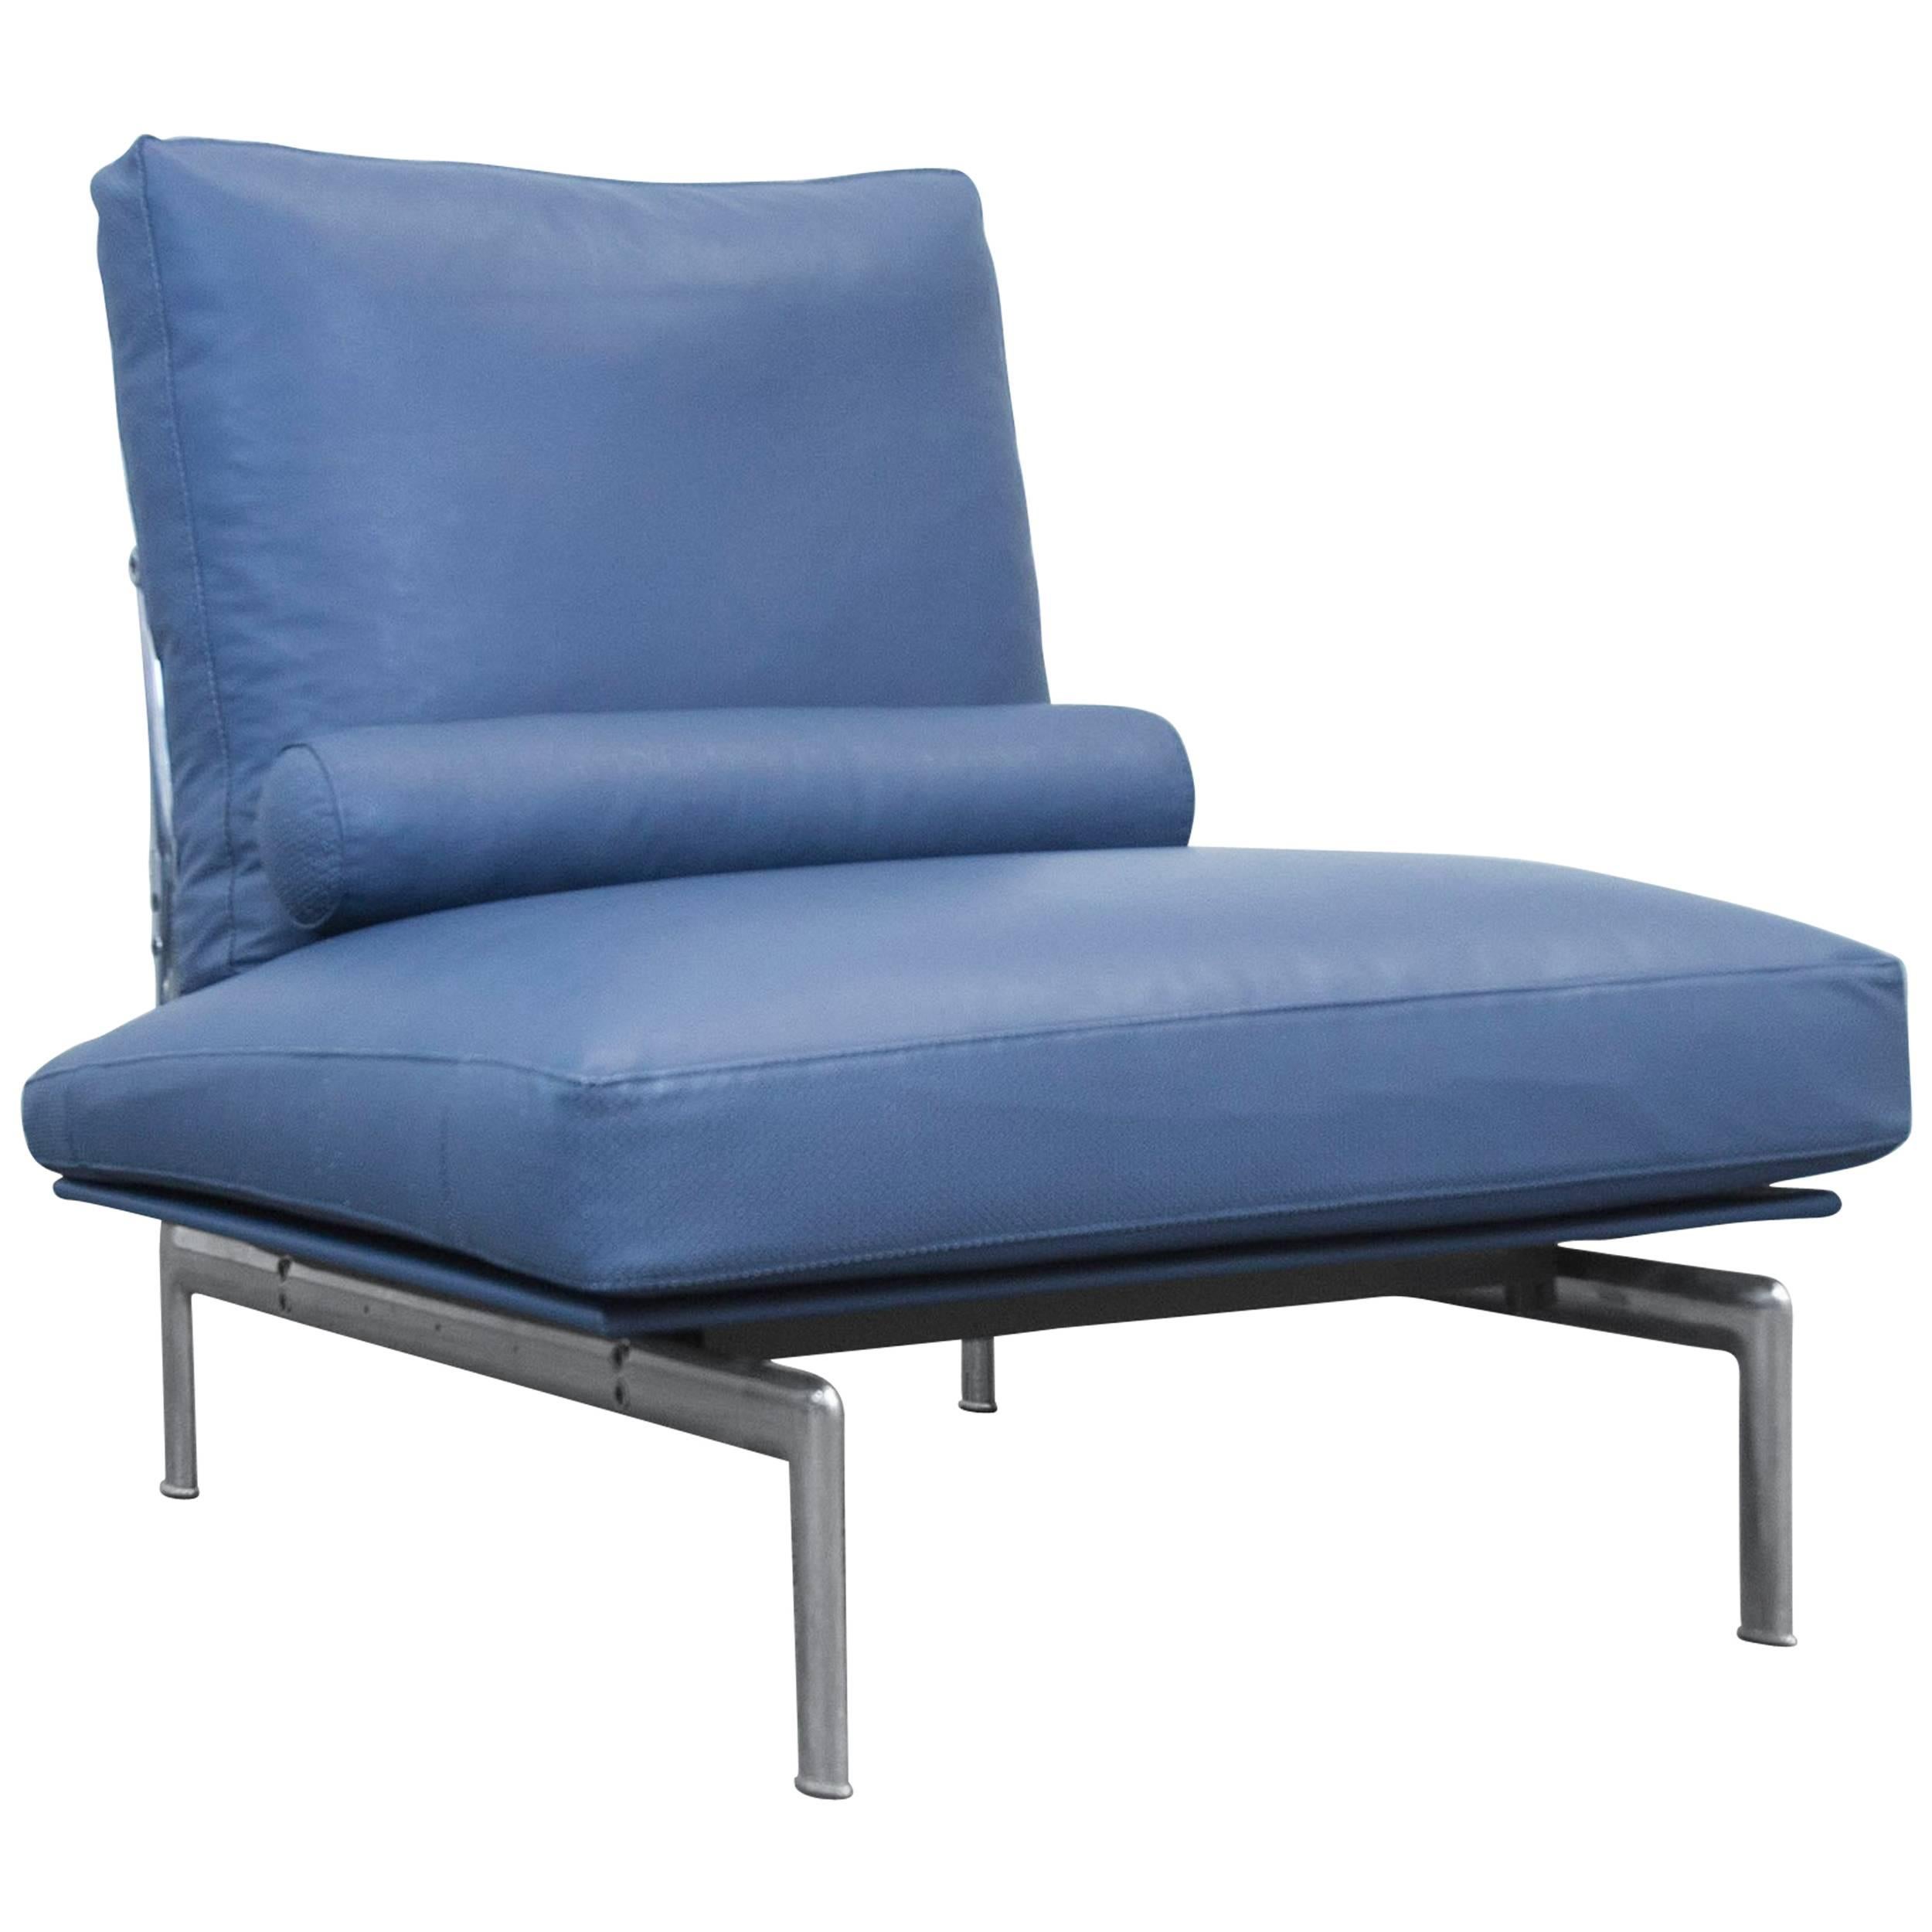 B&B Italia Diesis Designer Chair Blue Leather Oneseater Couch Modern